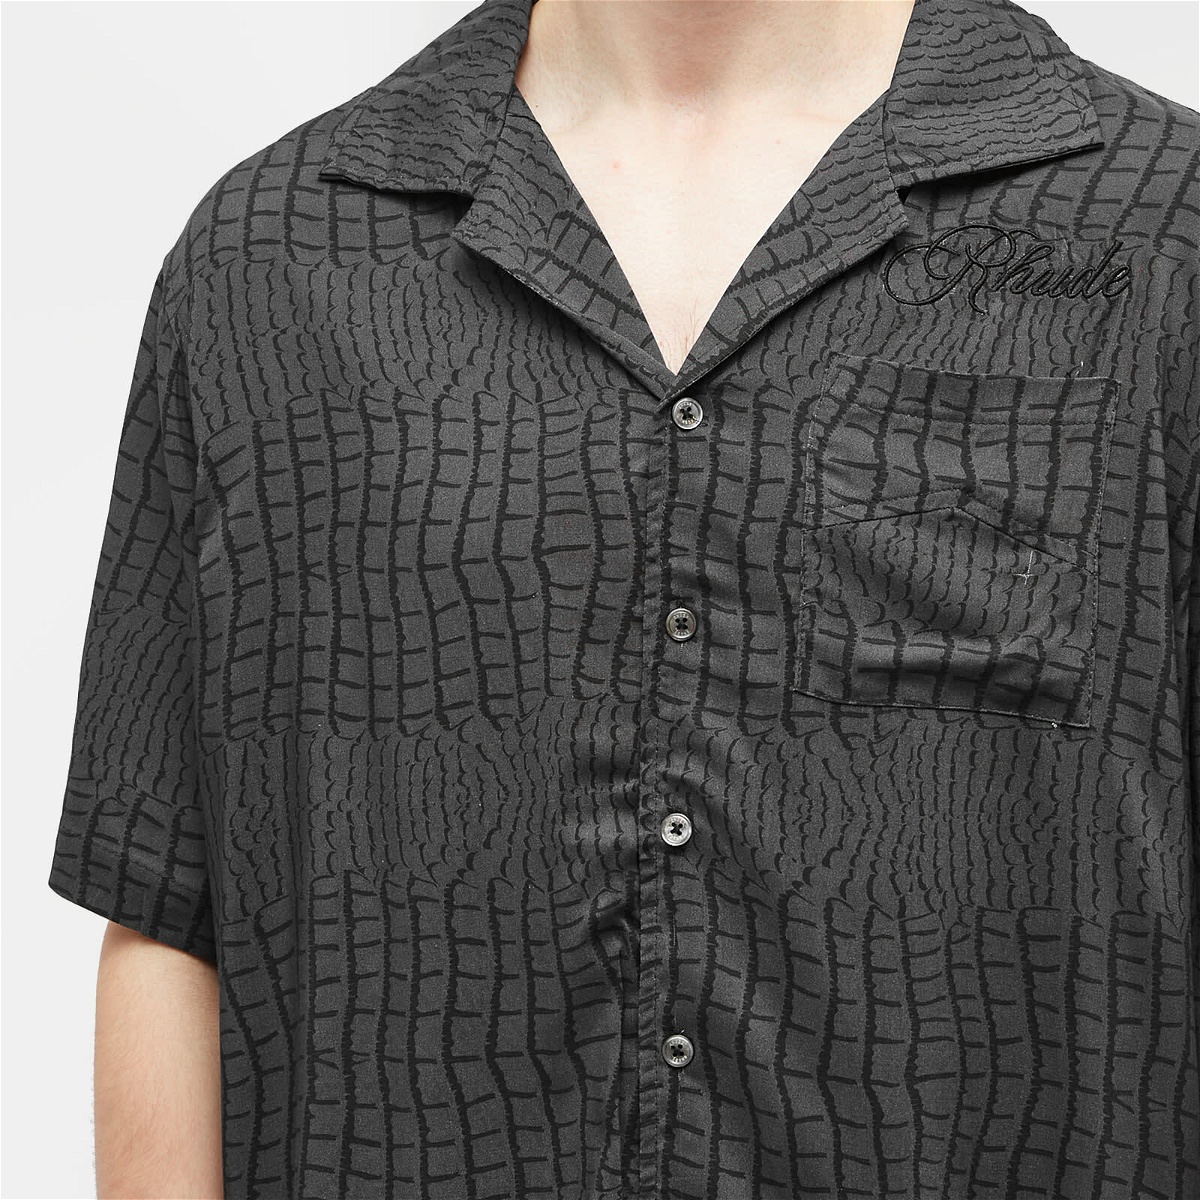 Rhude Men's Rayon Croc Print Vacation Shirt in Black